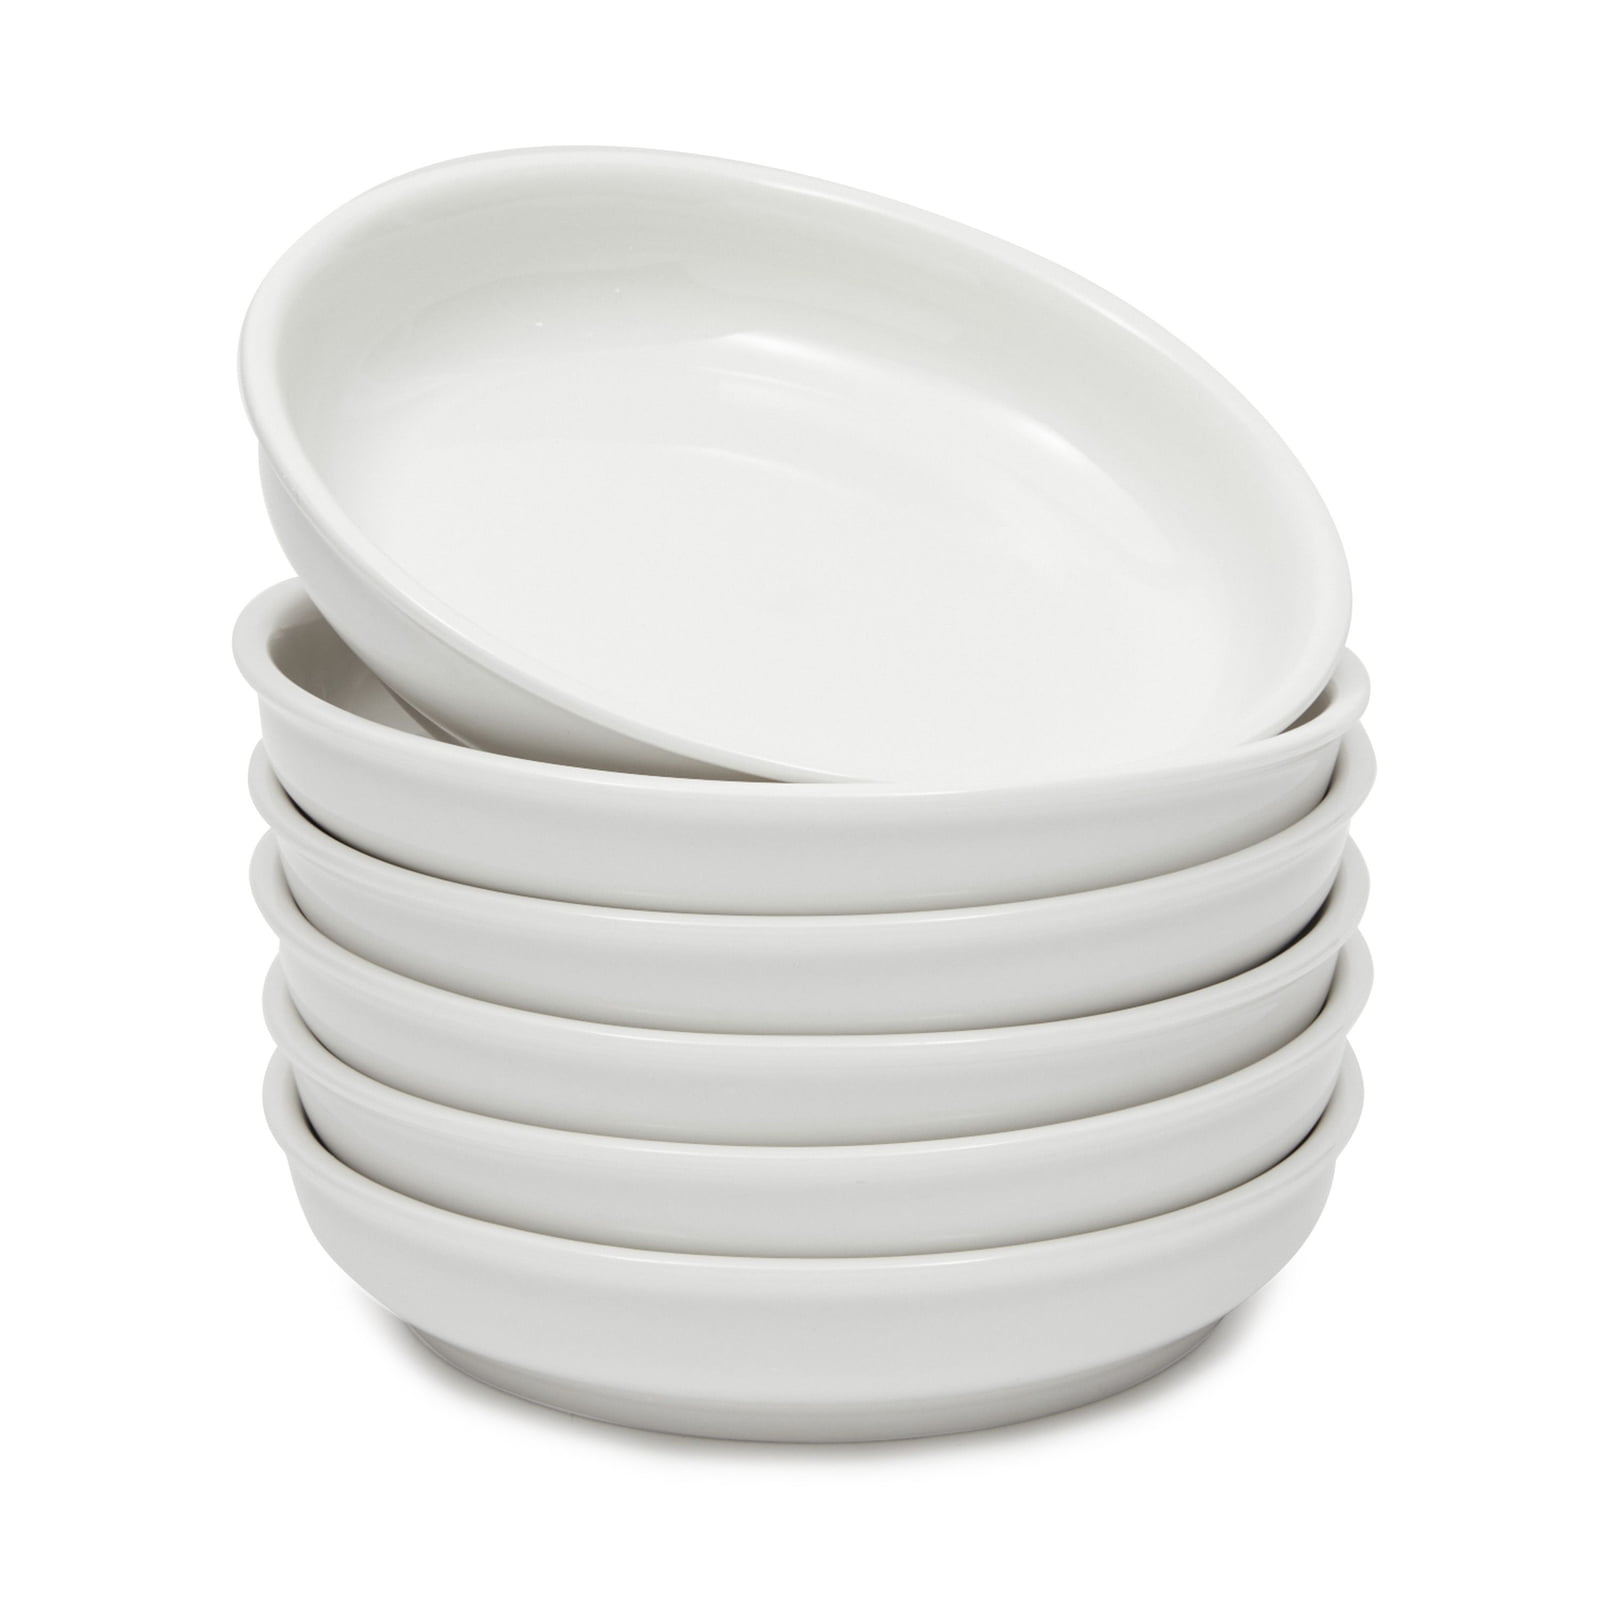 Lot of 4 Food Network White Stoneware Salad Pasta Bowls Large Rim 8.5” Diameter 